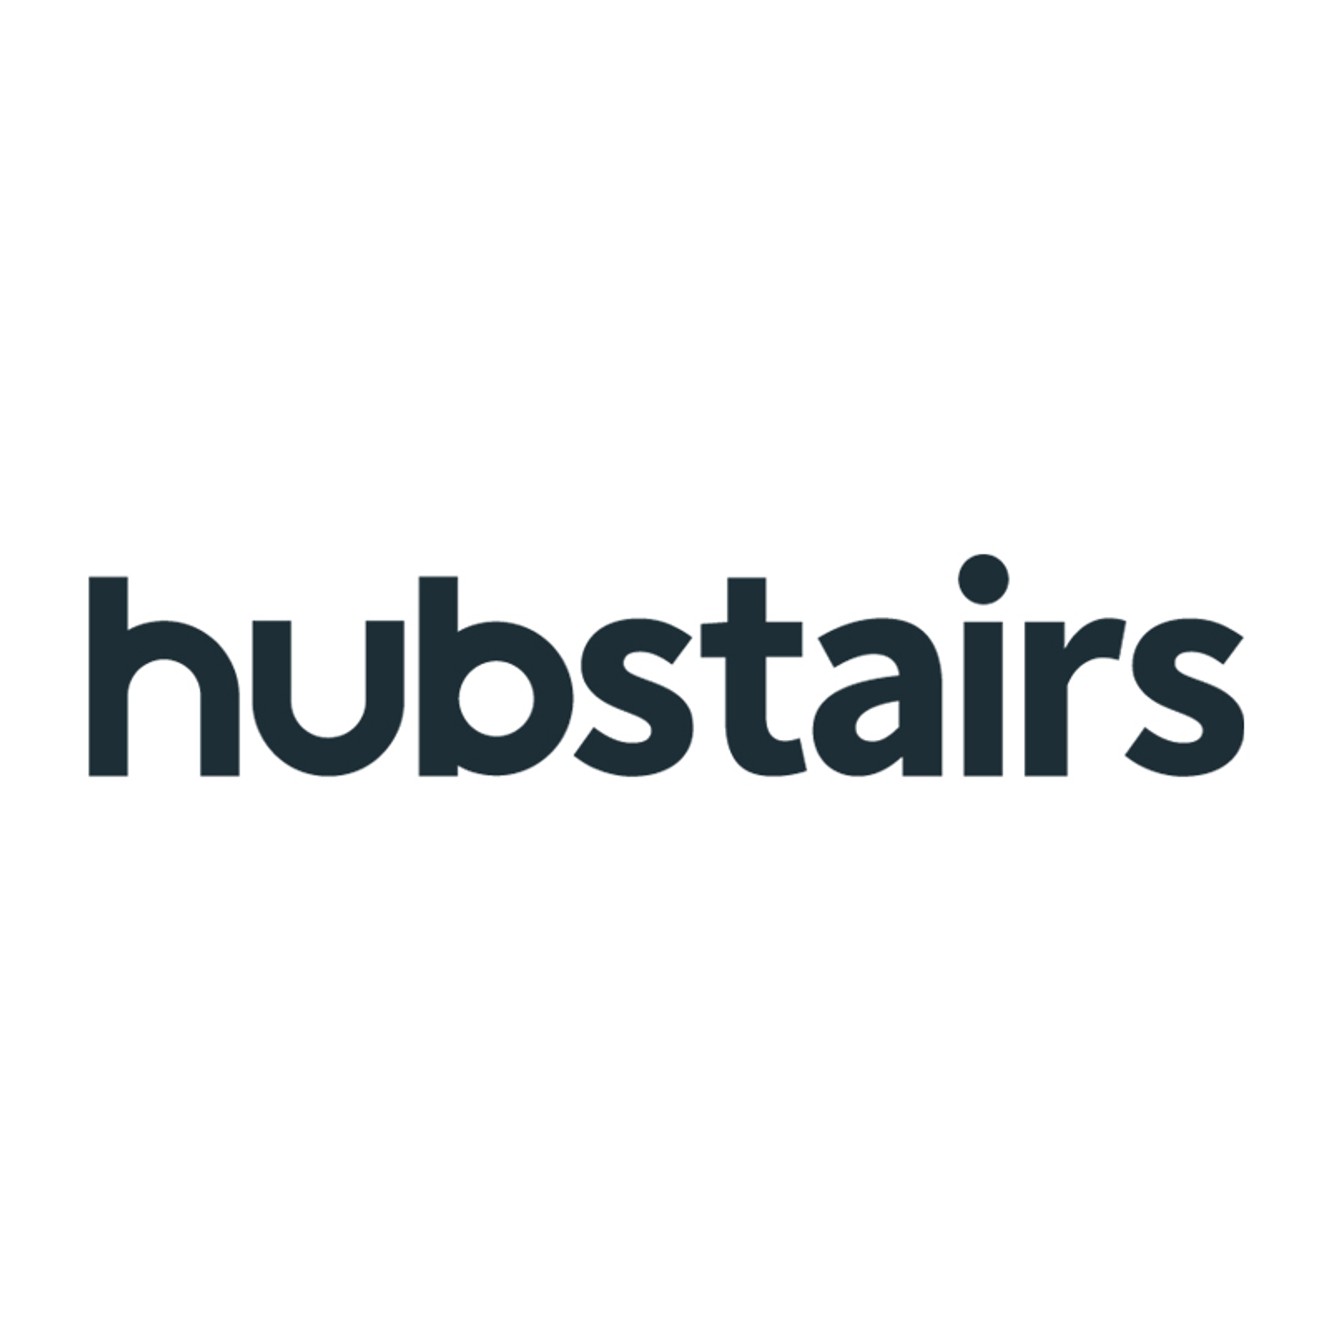 Hubstairs